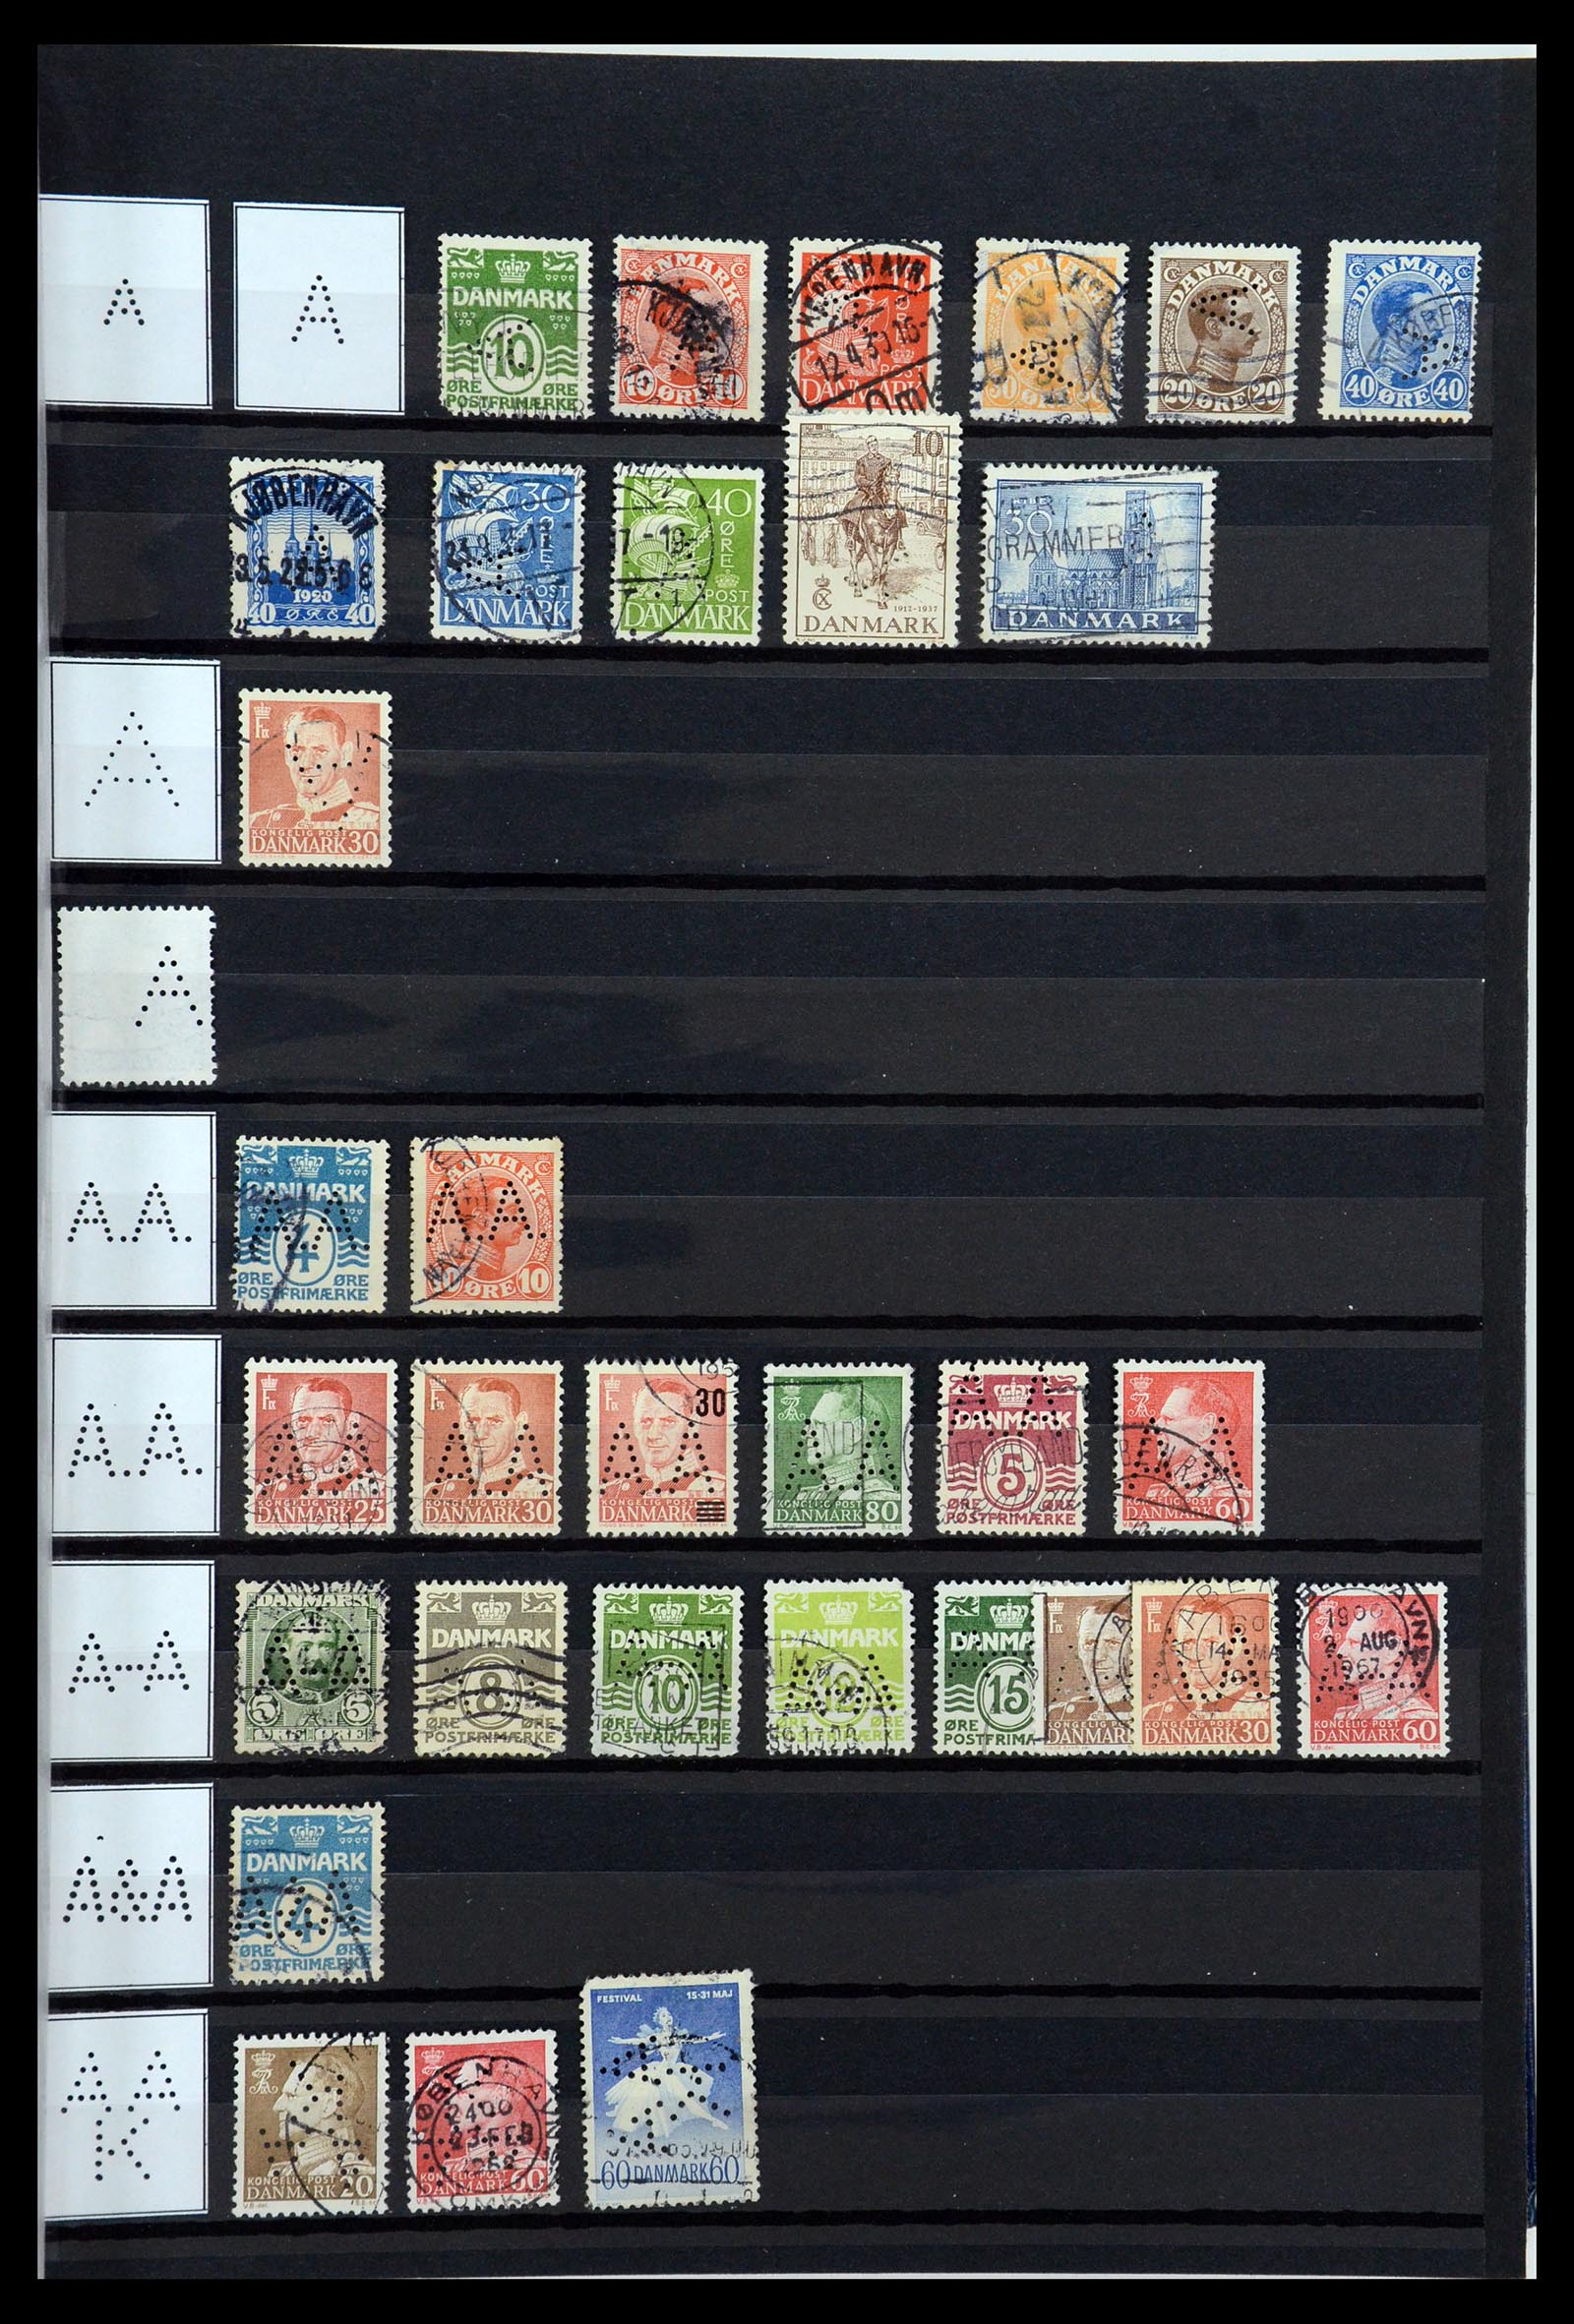 36396 001 - Stamp collection 36396 Denmark perfins.